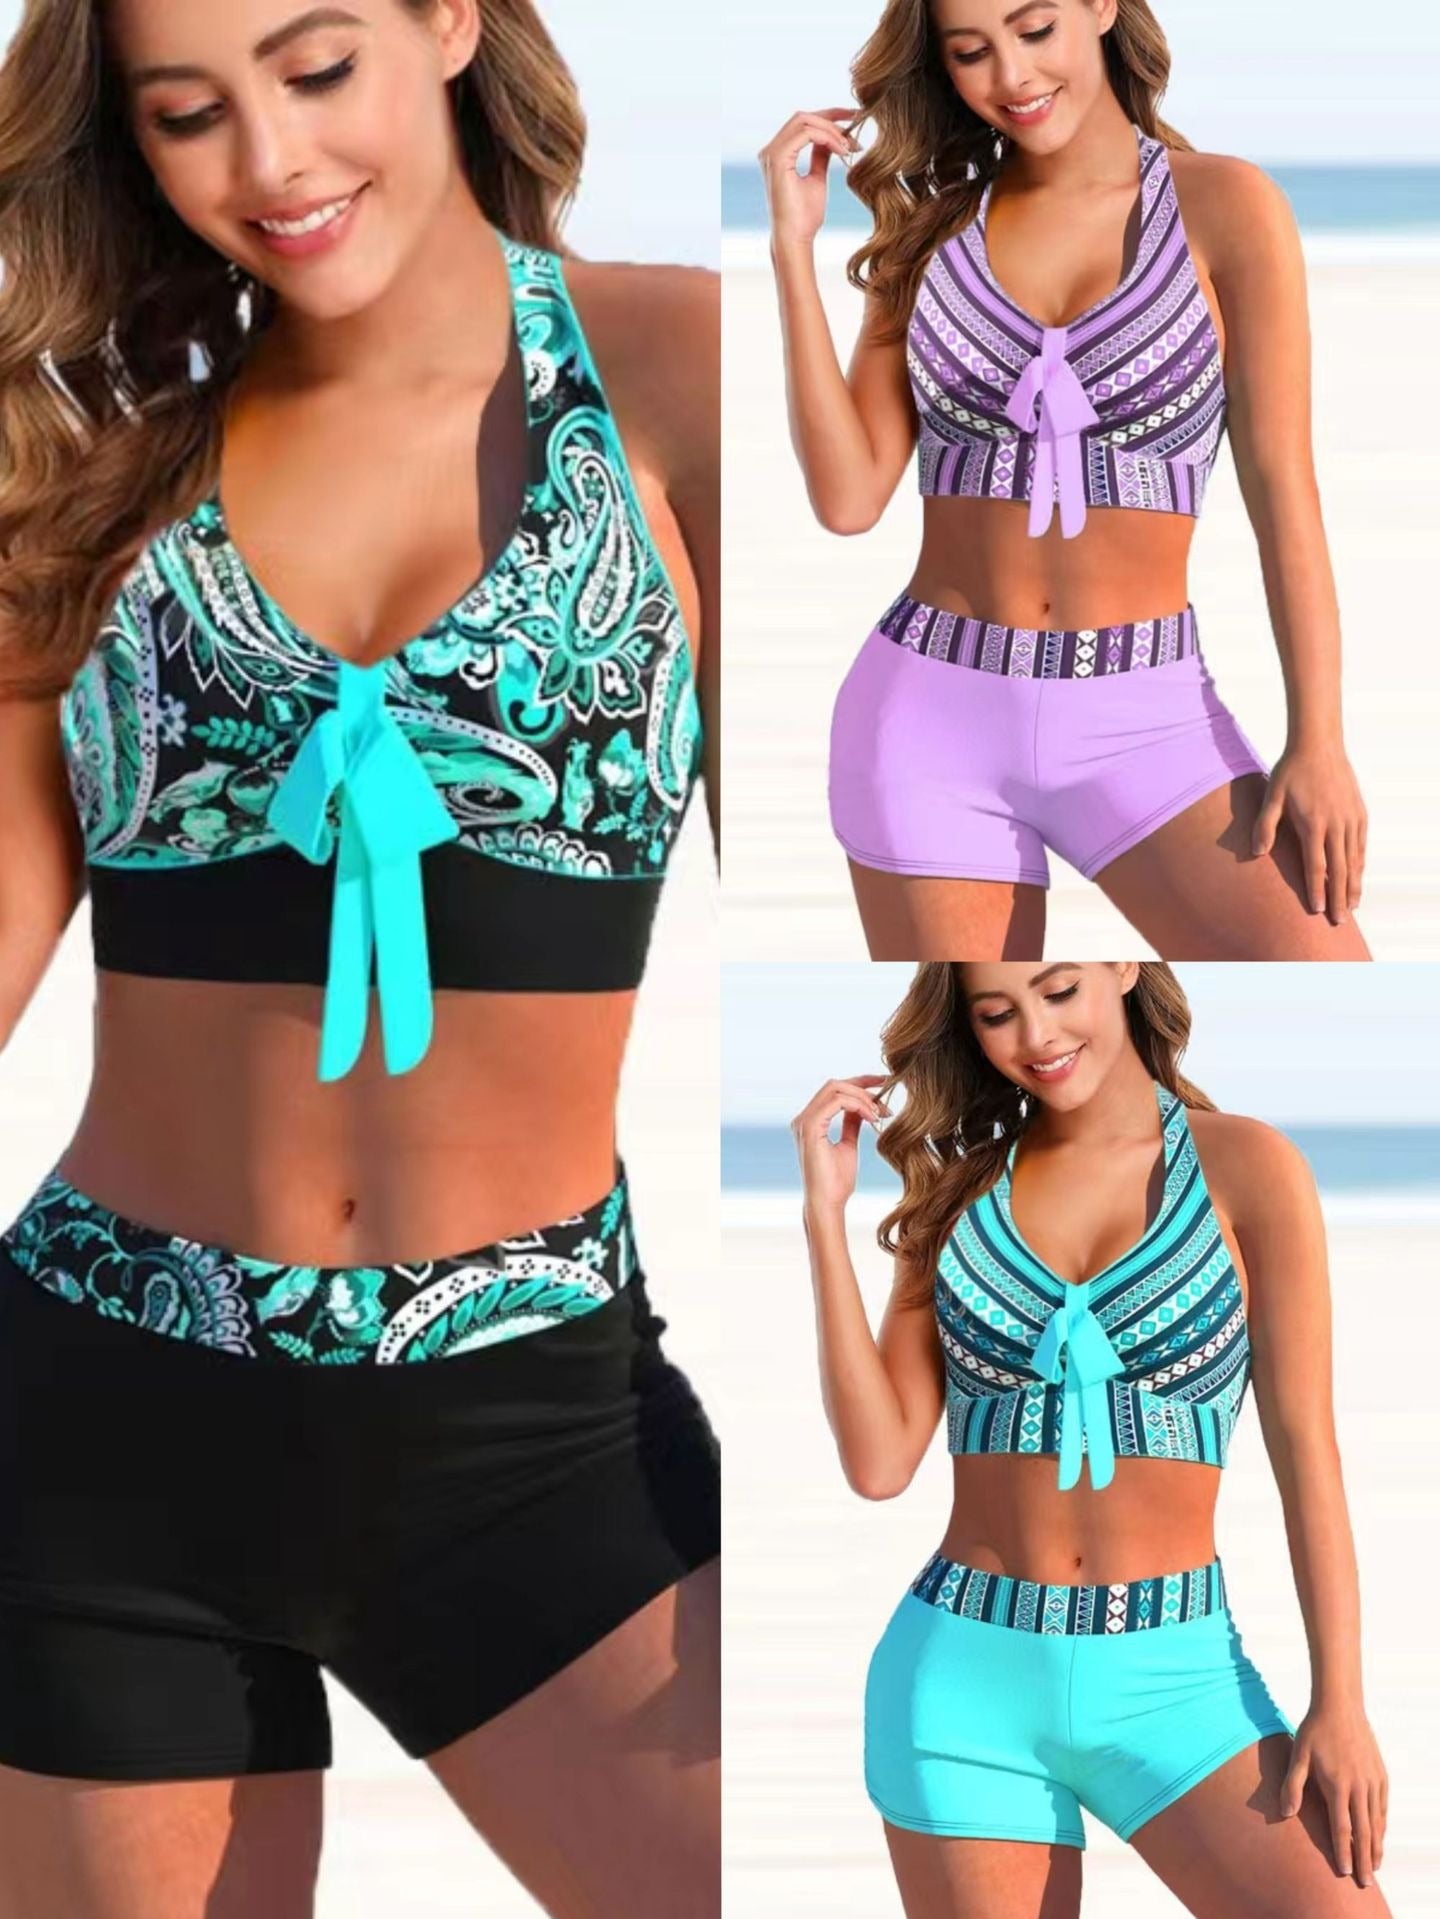 Bikini printed split swimsuit with flat angle stripes